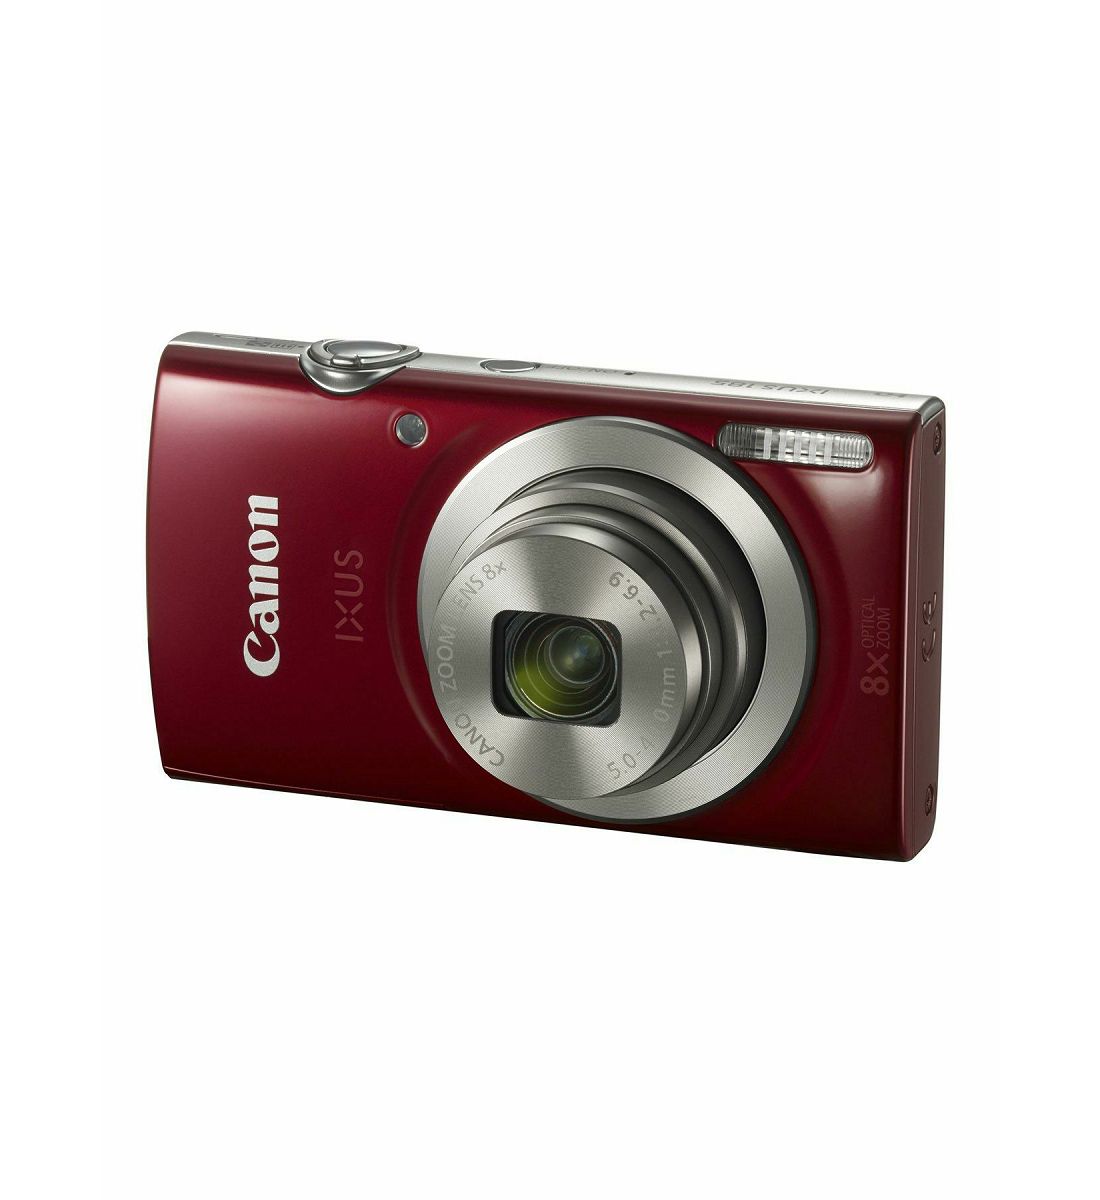 Canon IXUS 185 Red KIT crveni kompaktni digitalni fotoaparat